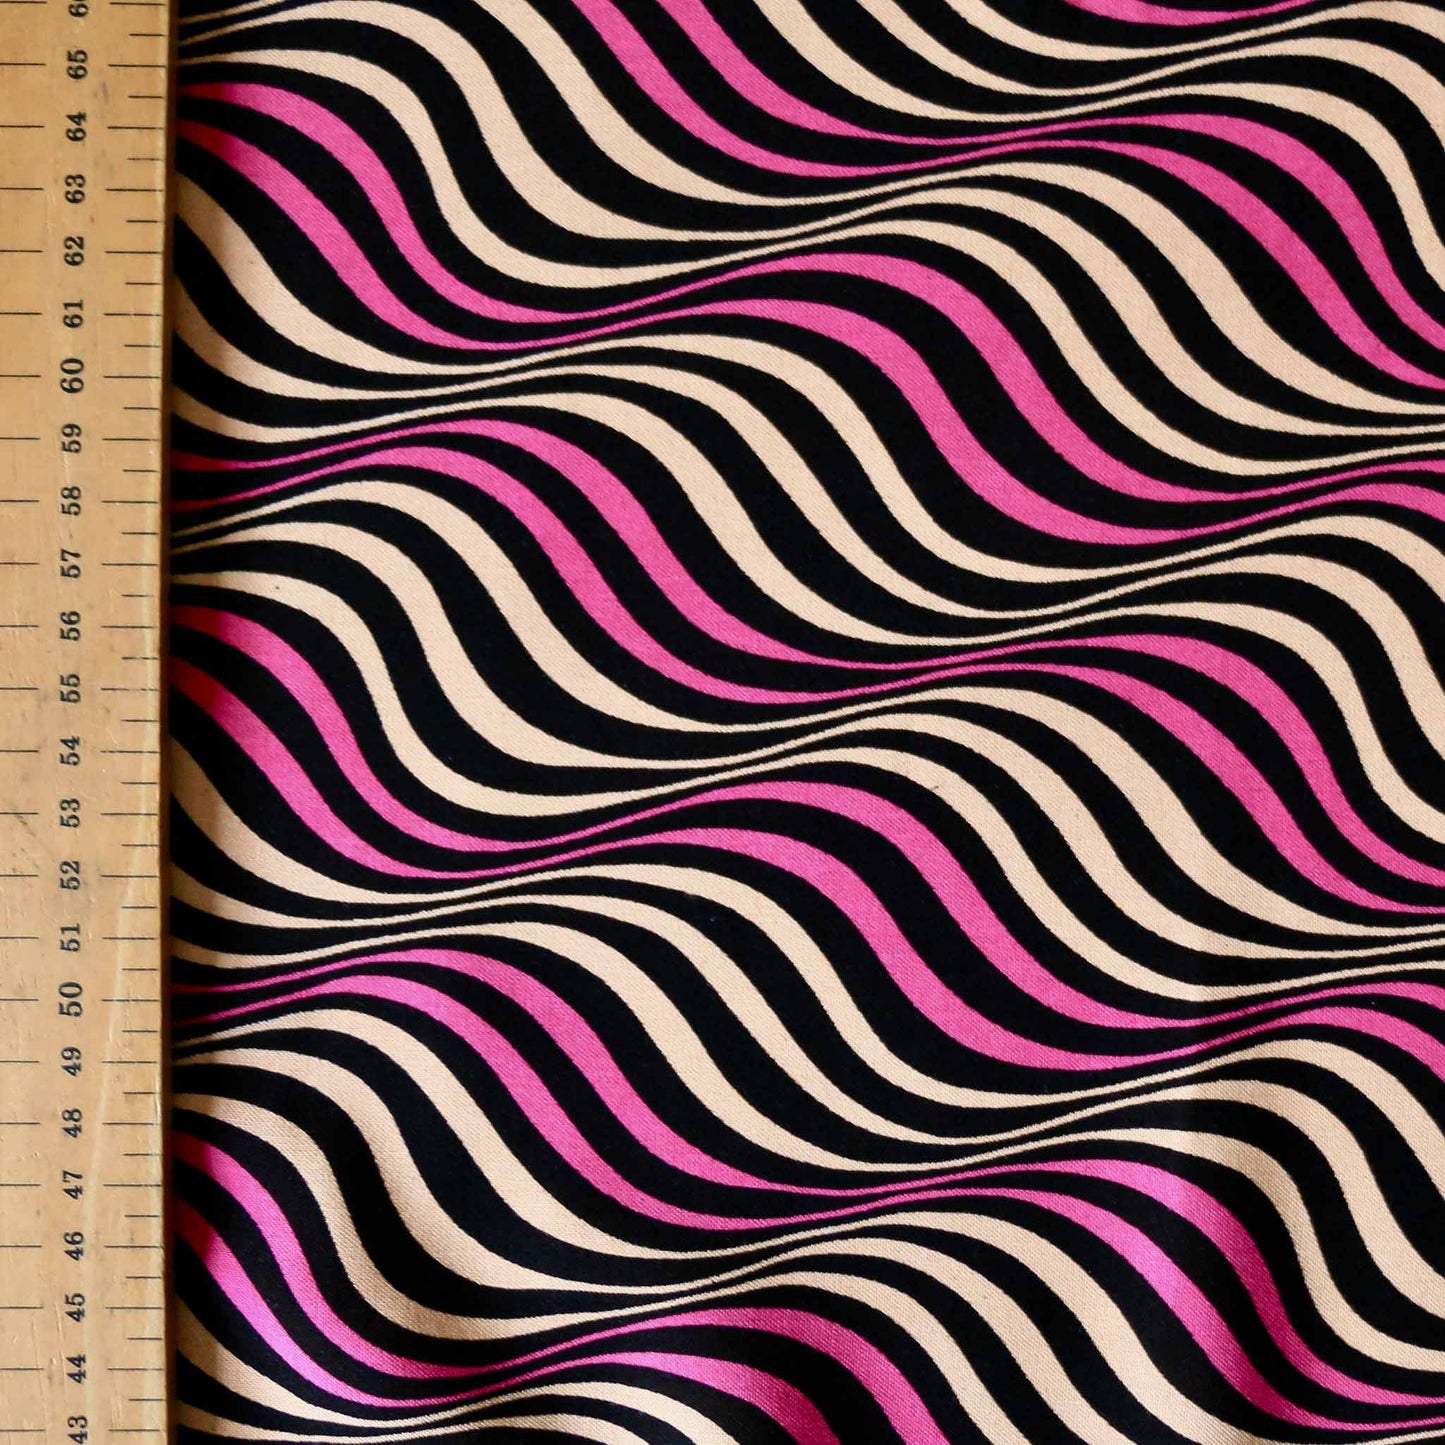 metre black beige and purple viscose challis dressmaking rayon fabric with wavey stripe design